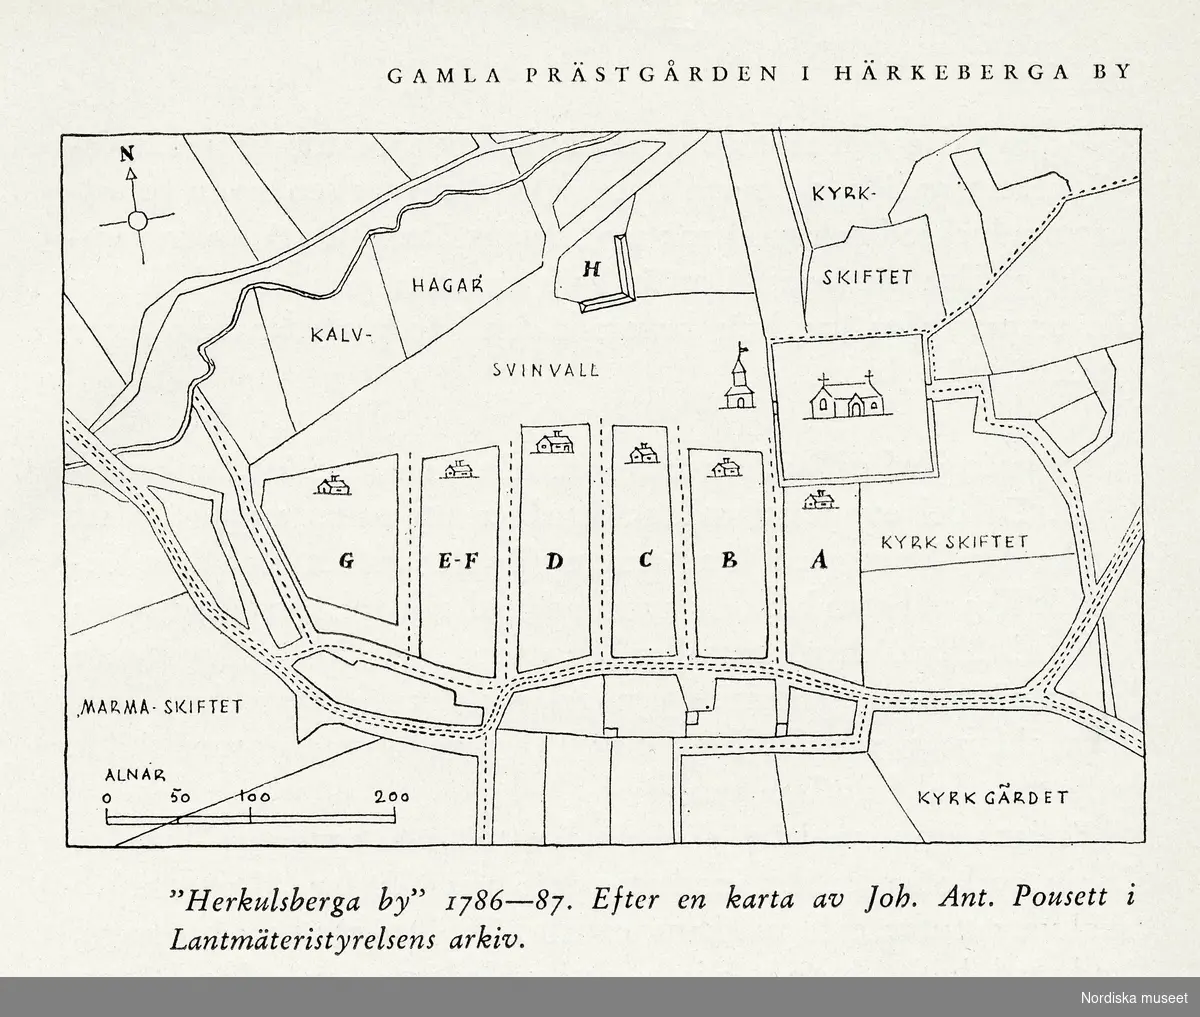 Härkeberga "Herkulsberga by" 1786-1787 efter en karta av Joh. Ant. Pousett i Lantmäteristyrelsens arkiv.